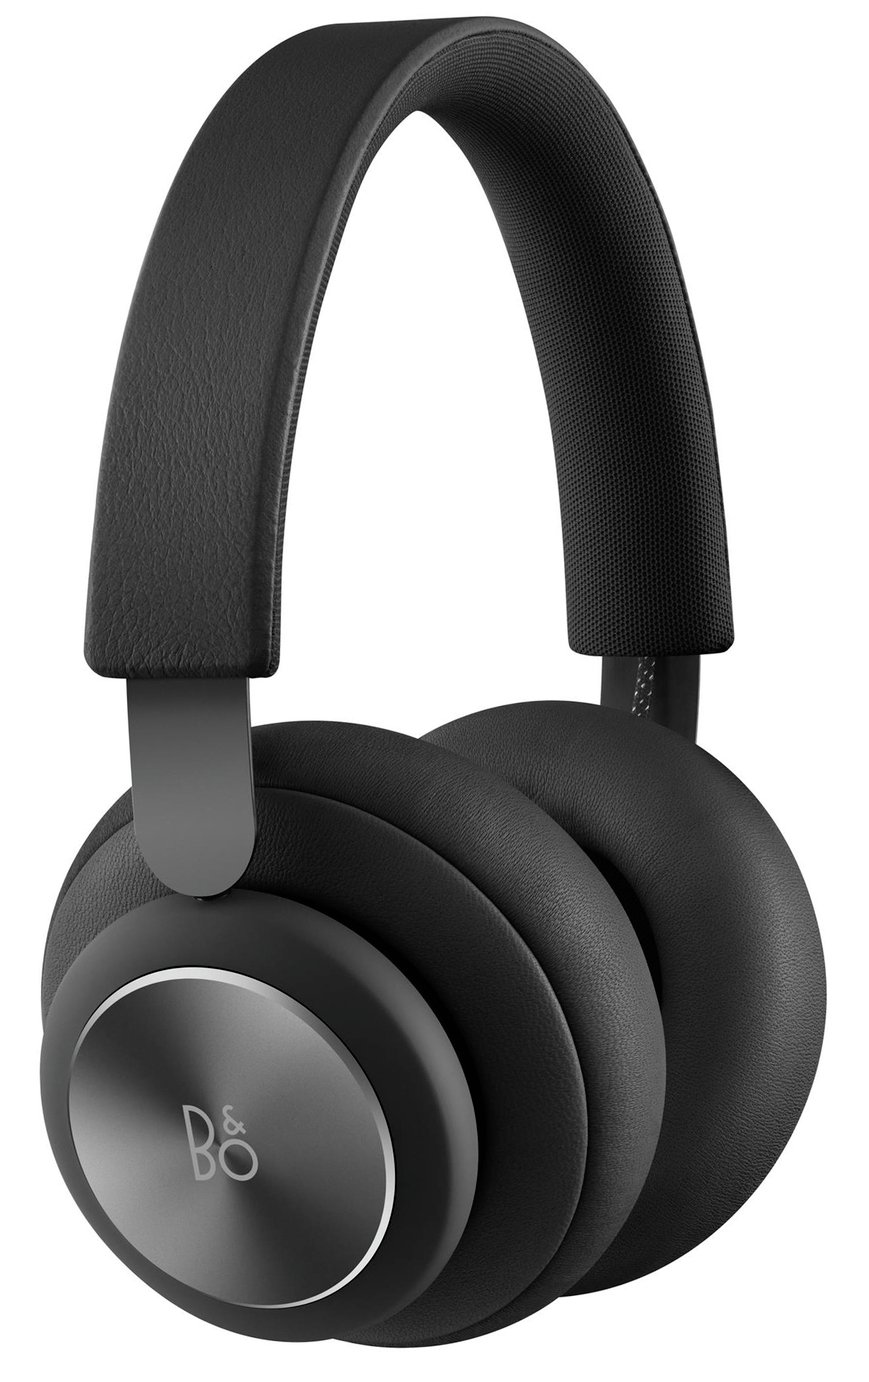 Bang & Olufsen Beoplay H4 2nd Gen Wireless Headphones Black Review